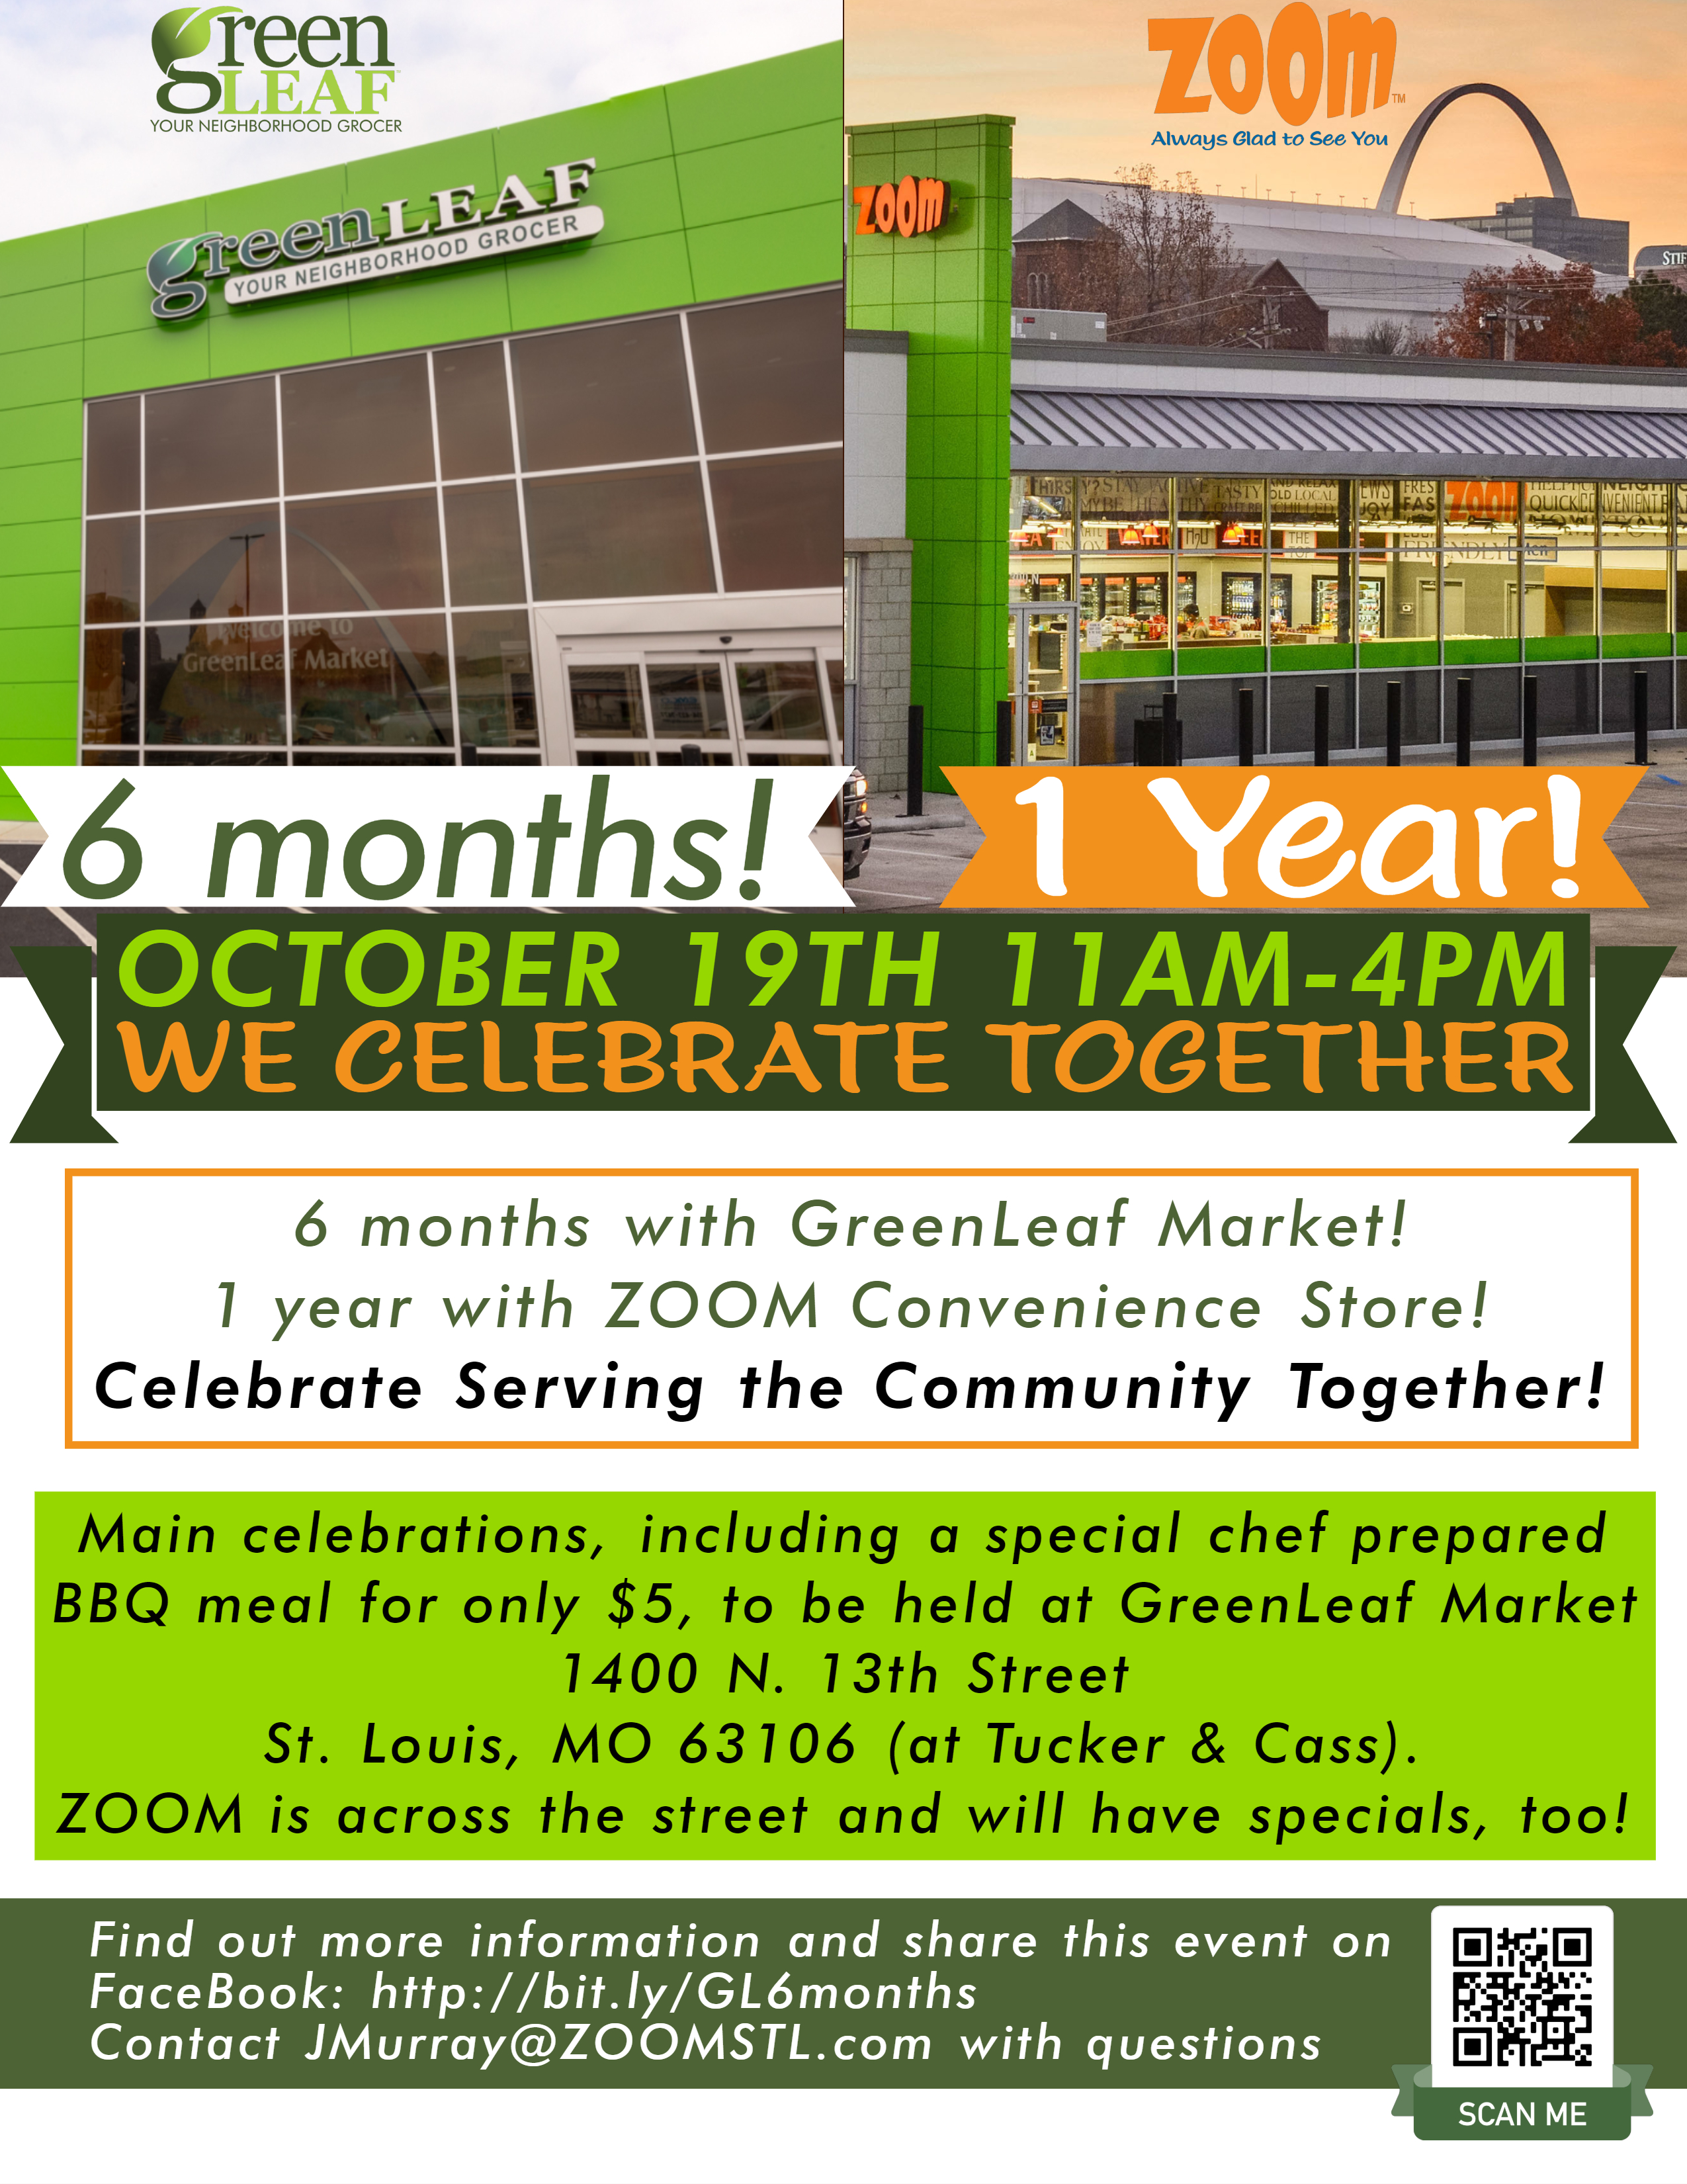 Zoom Convenience Store St. Louis 